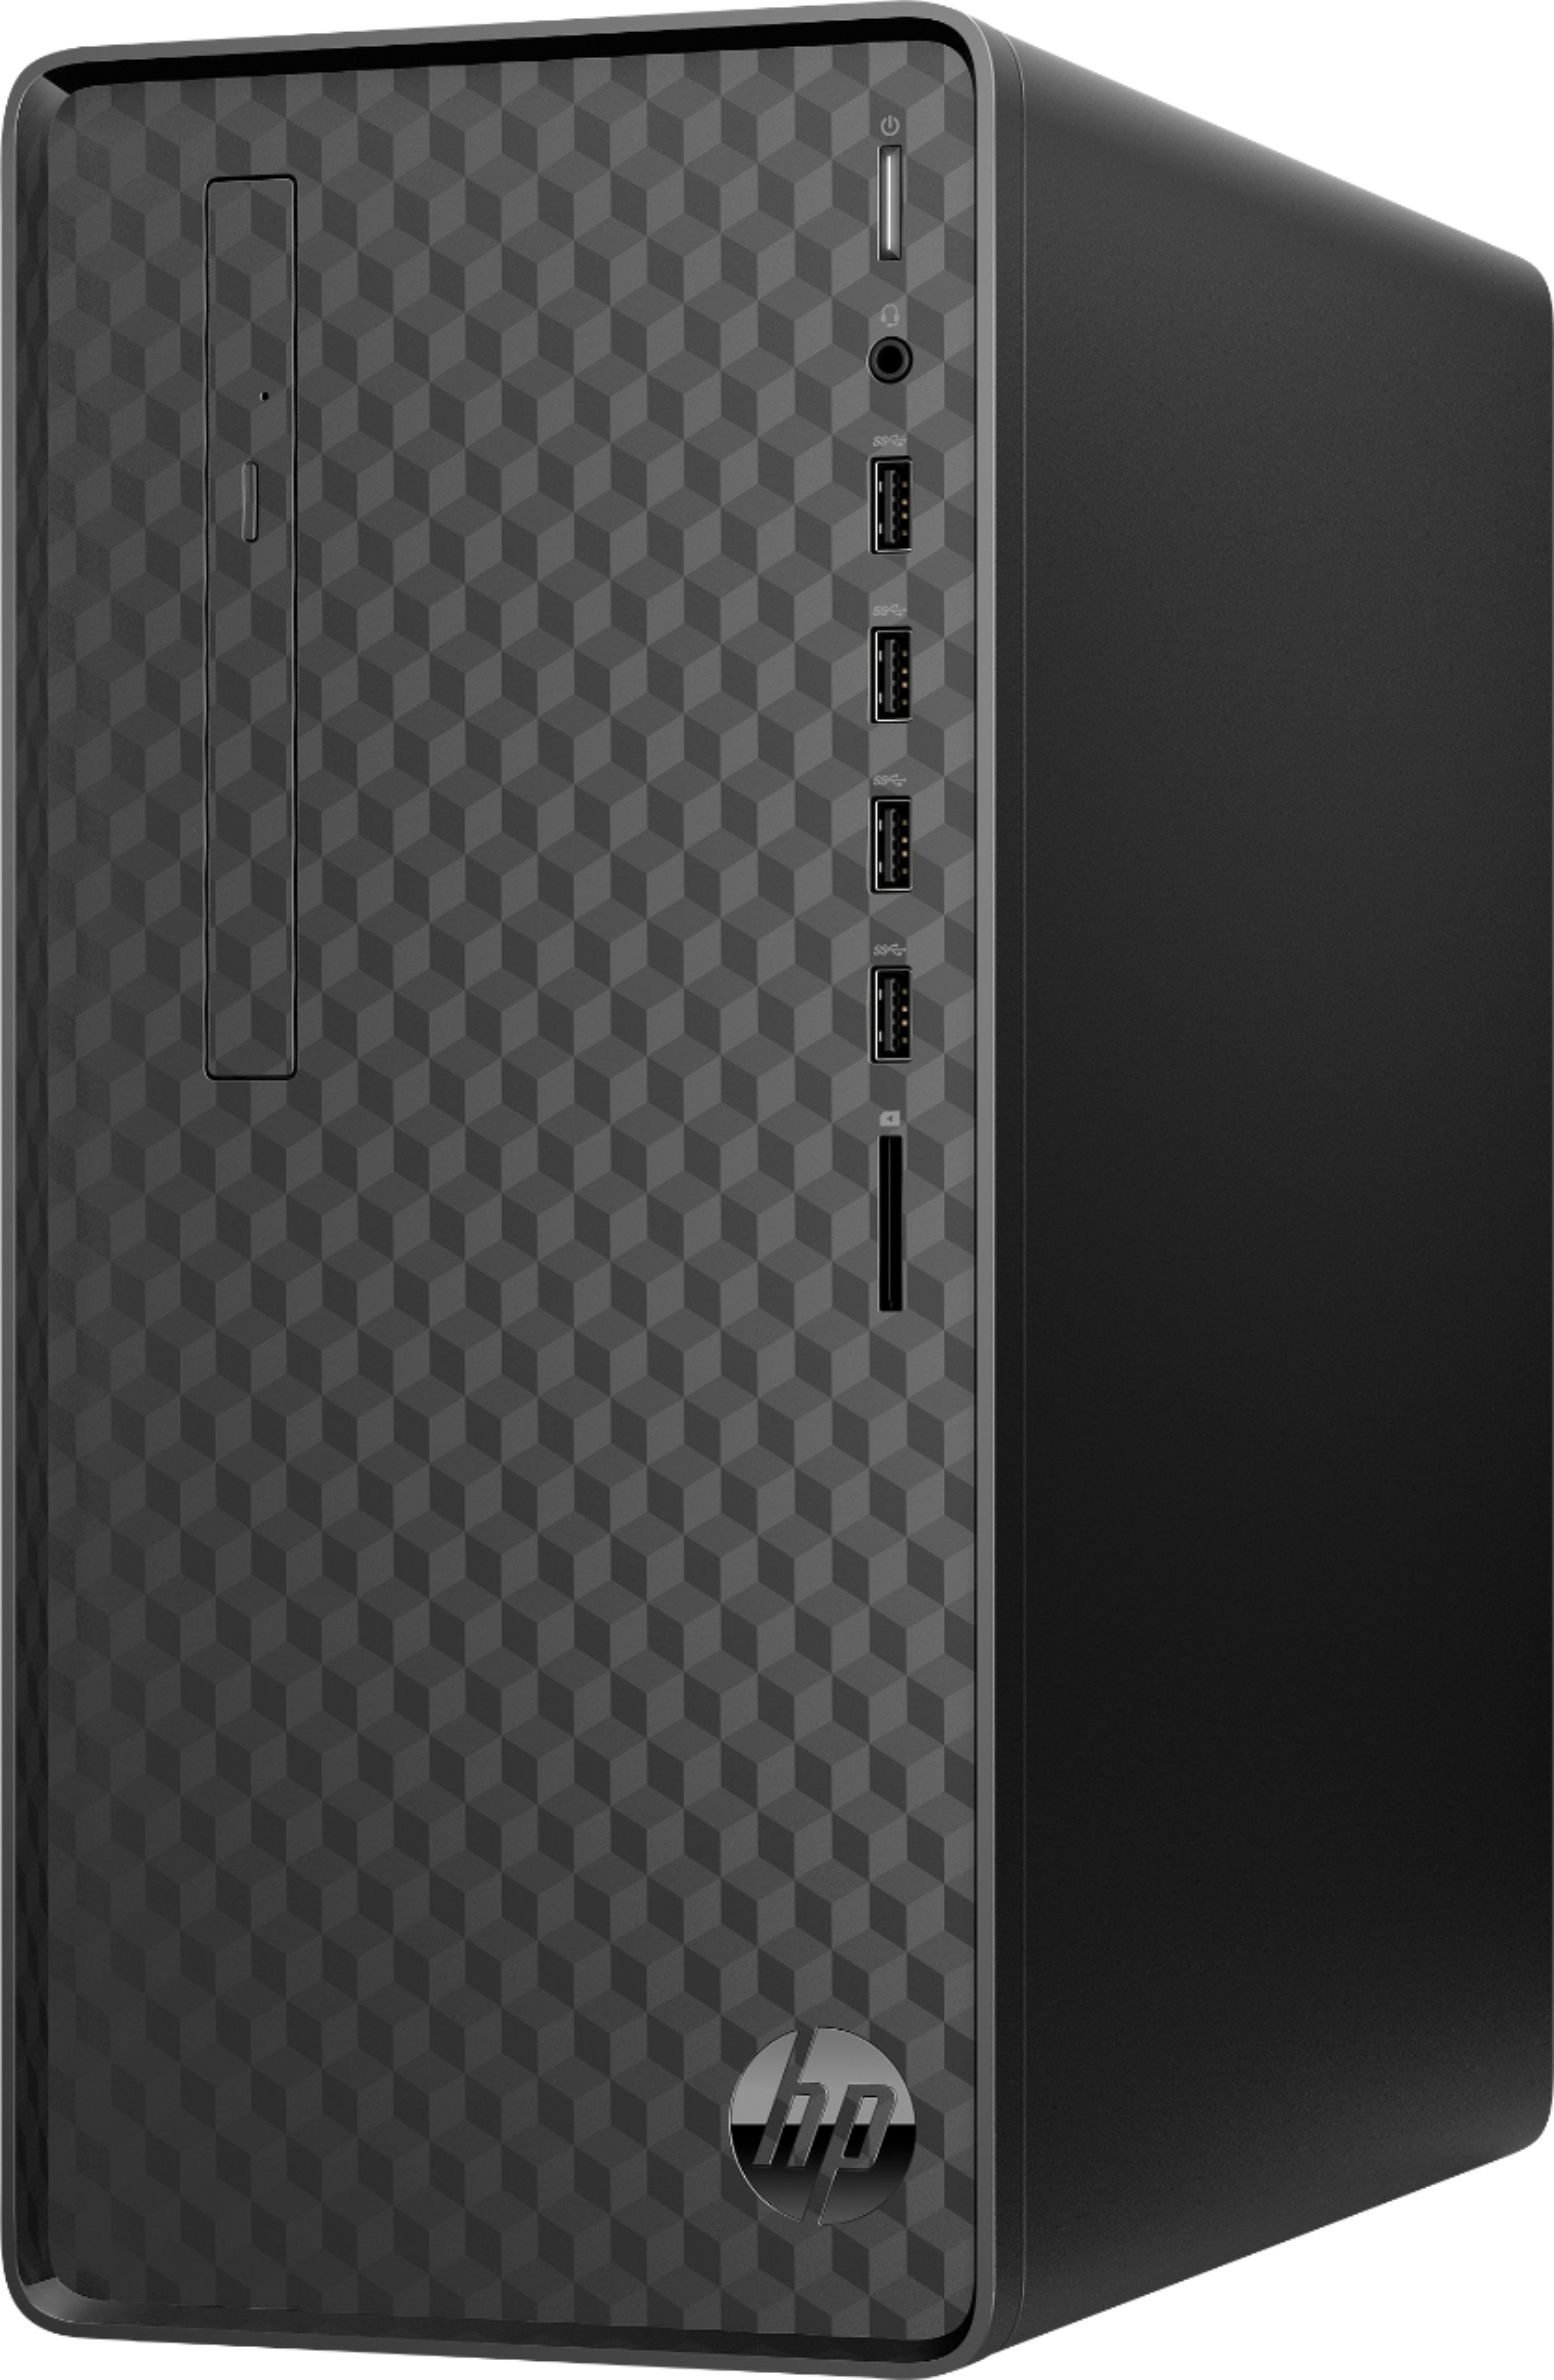 Angle View: HP - Desktop - AMD Ryzen 5-Series - 12GB Memory - 256GB Solid State Drive - Jet Black